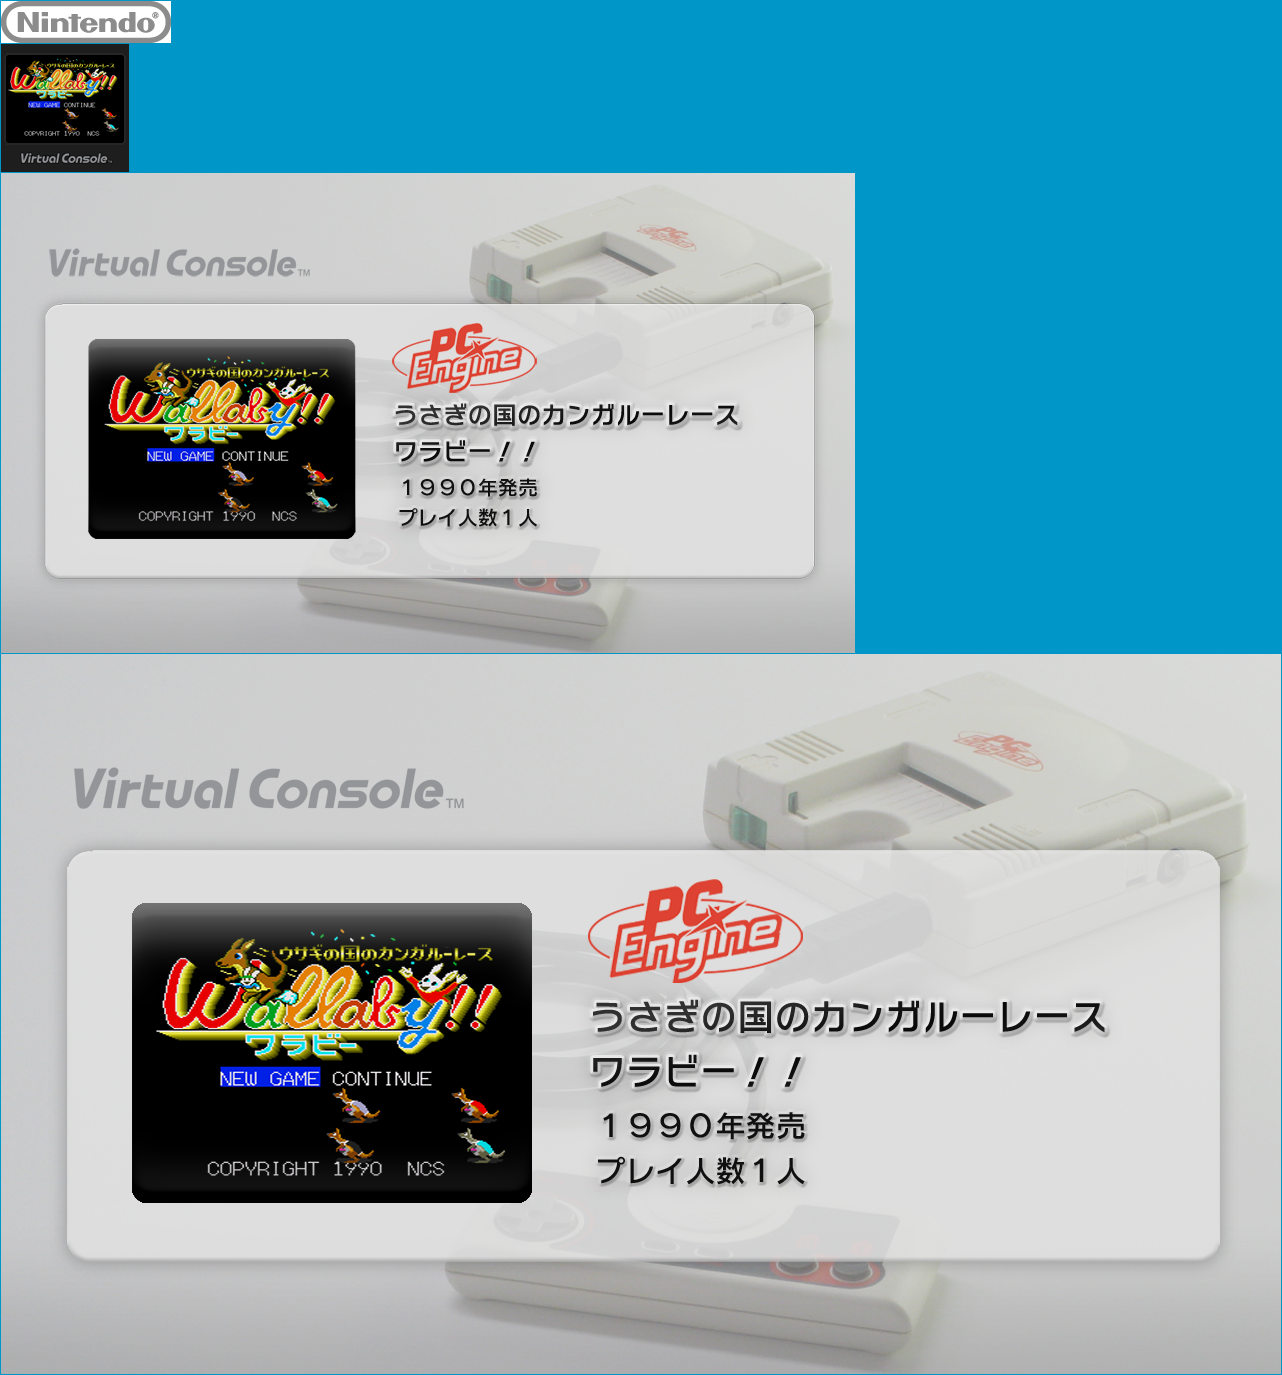 Virtual Console - Usagi no Kuni no Kangaroo Race Wallaby!!